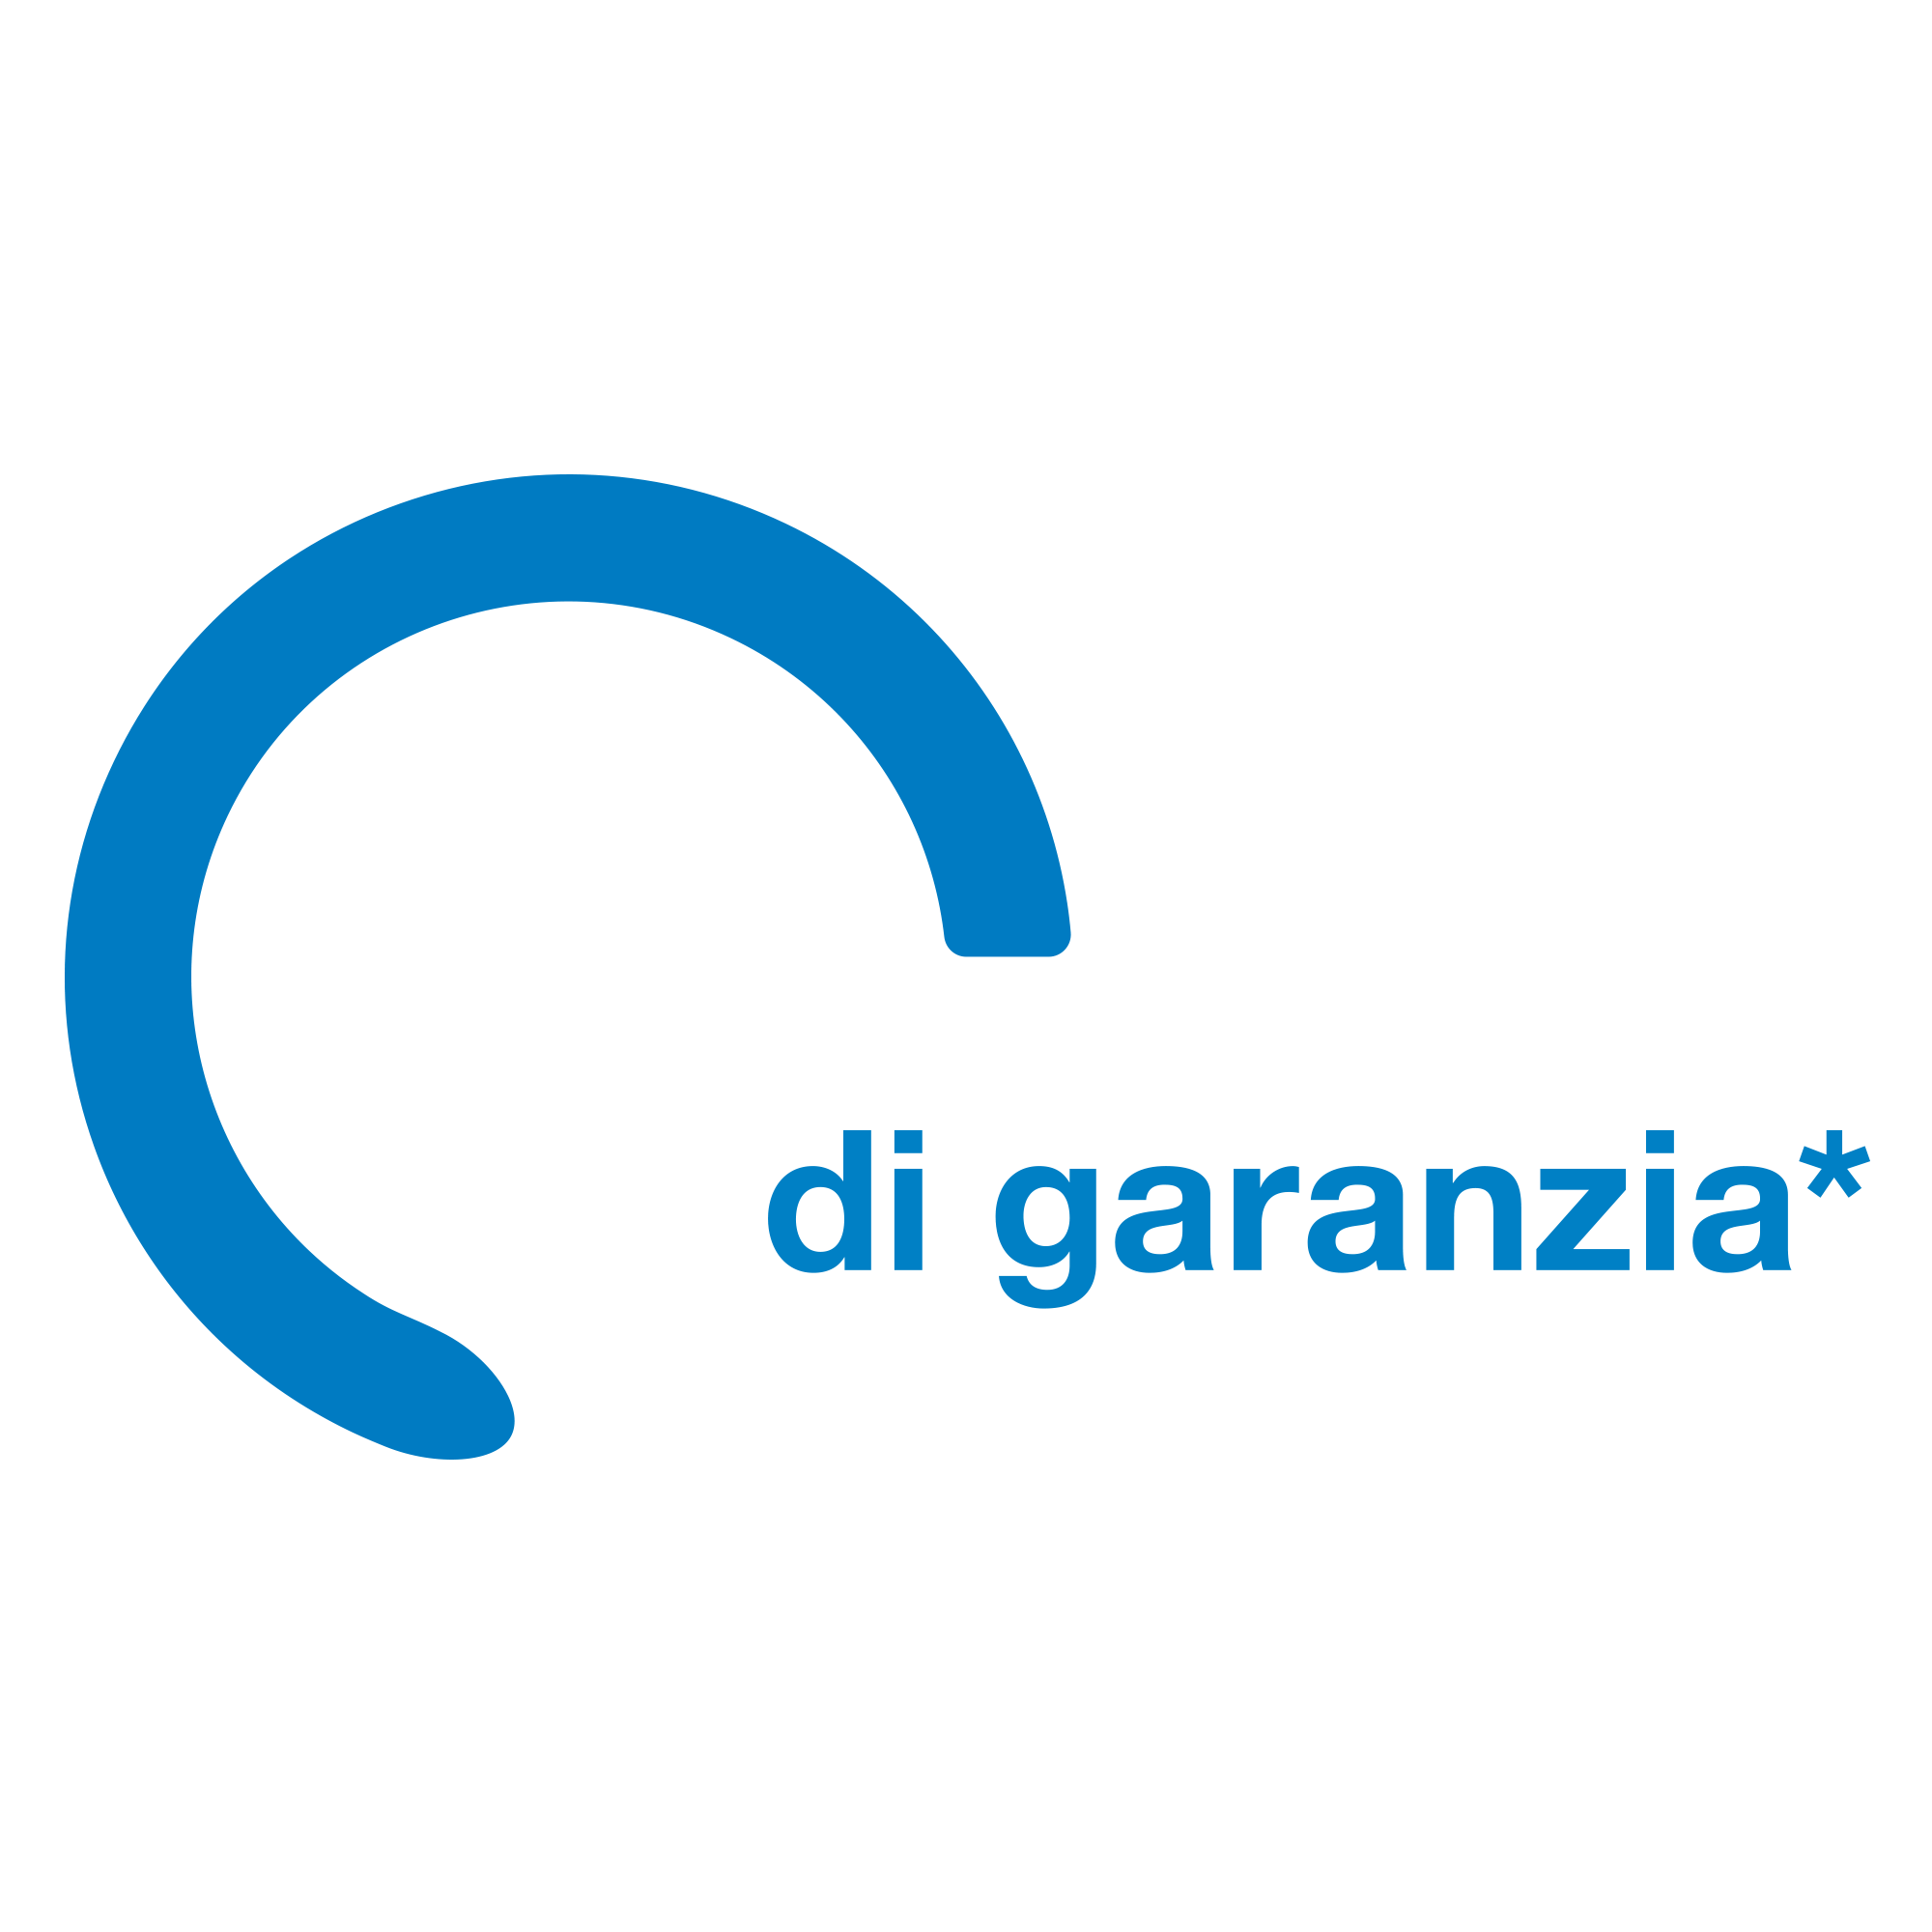 4 anni logo 1.png